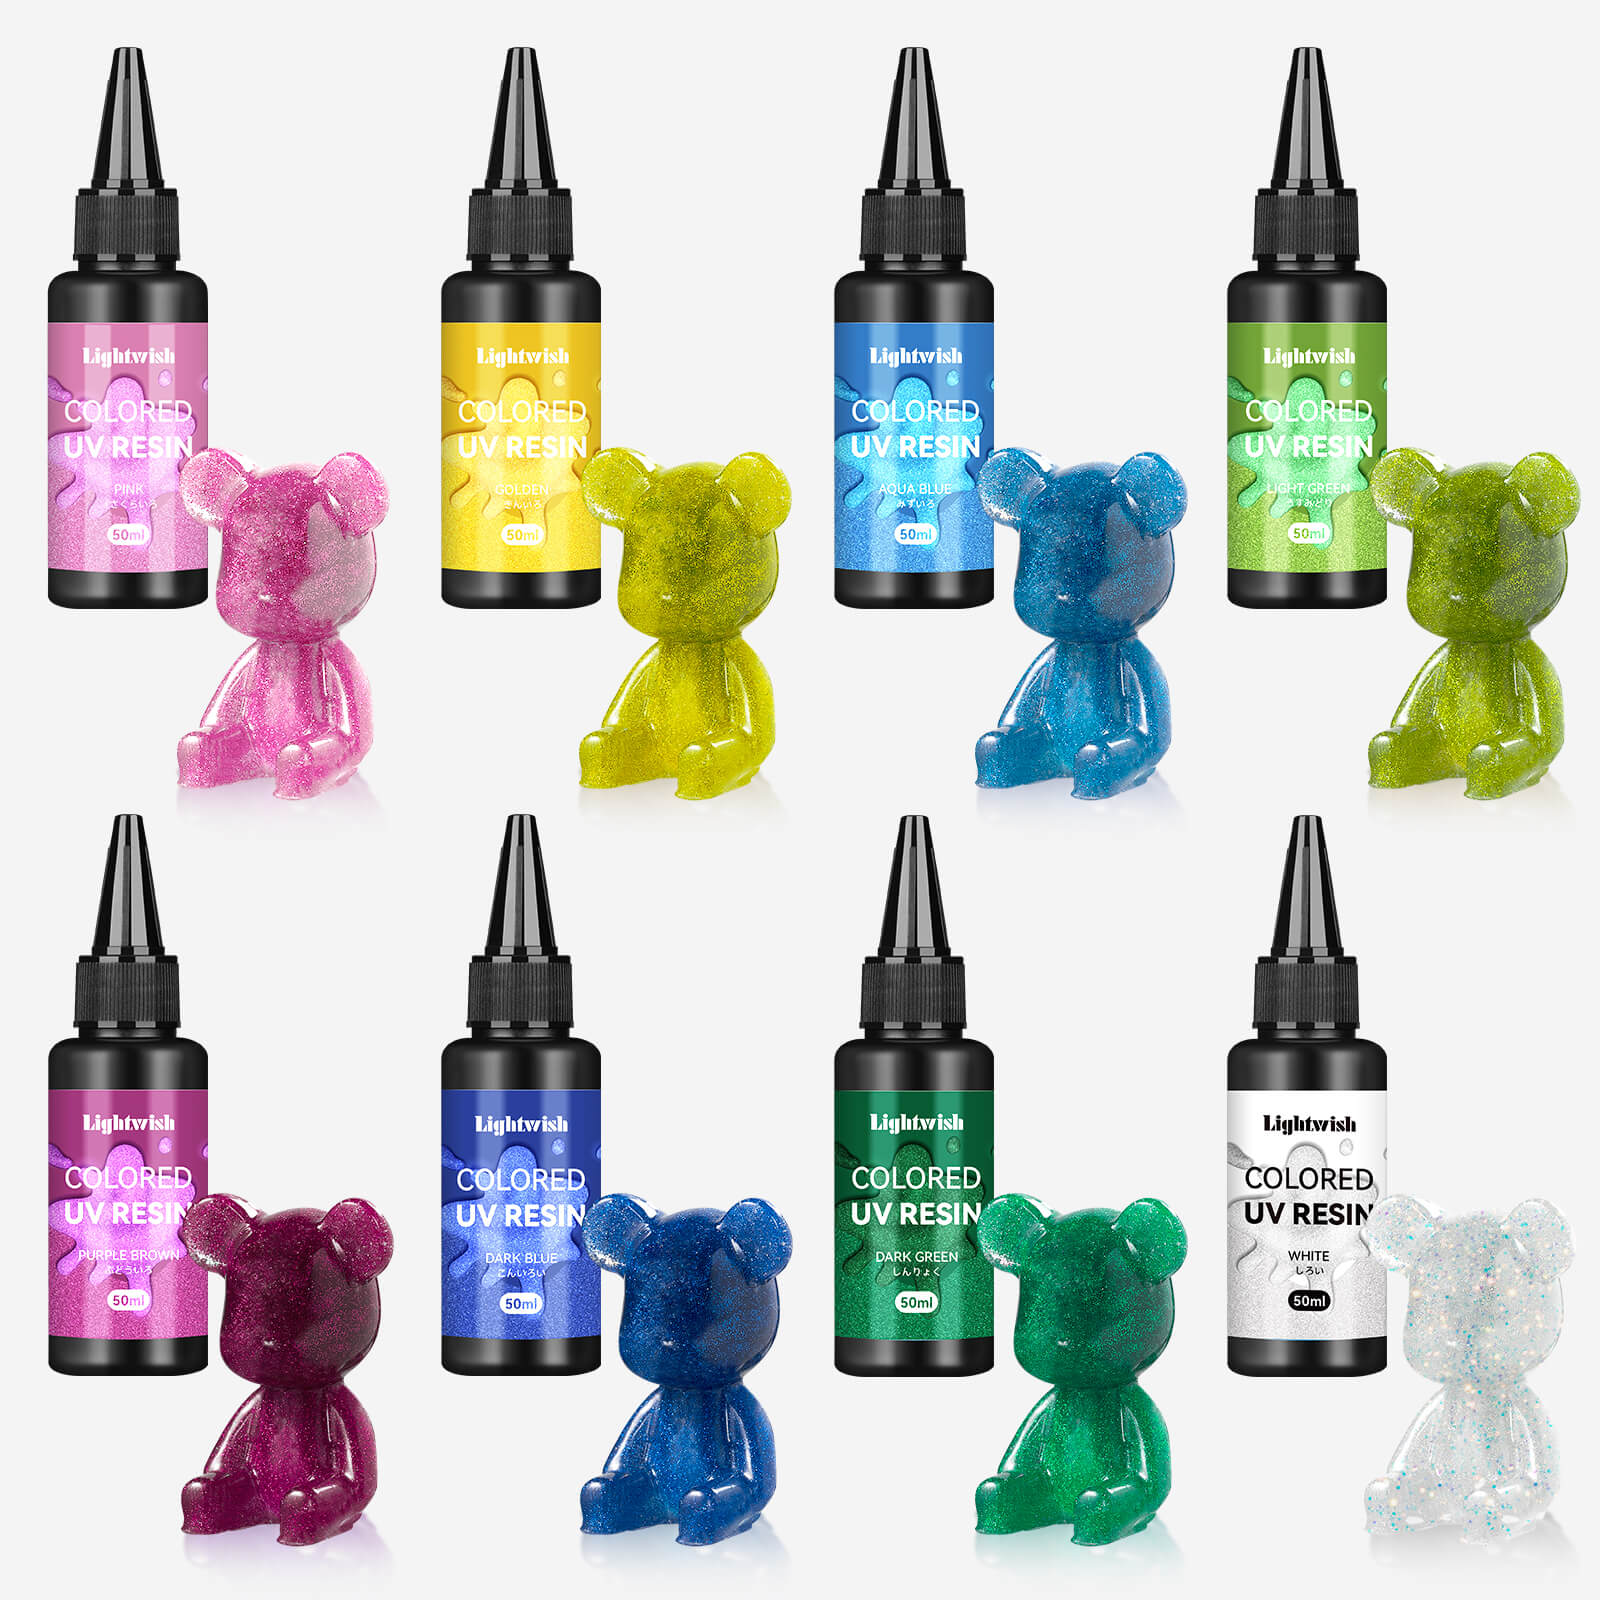 Lightwish Colored UV Resins, Diamond Glitter 8 Colors UV Resin Kit